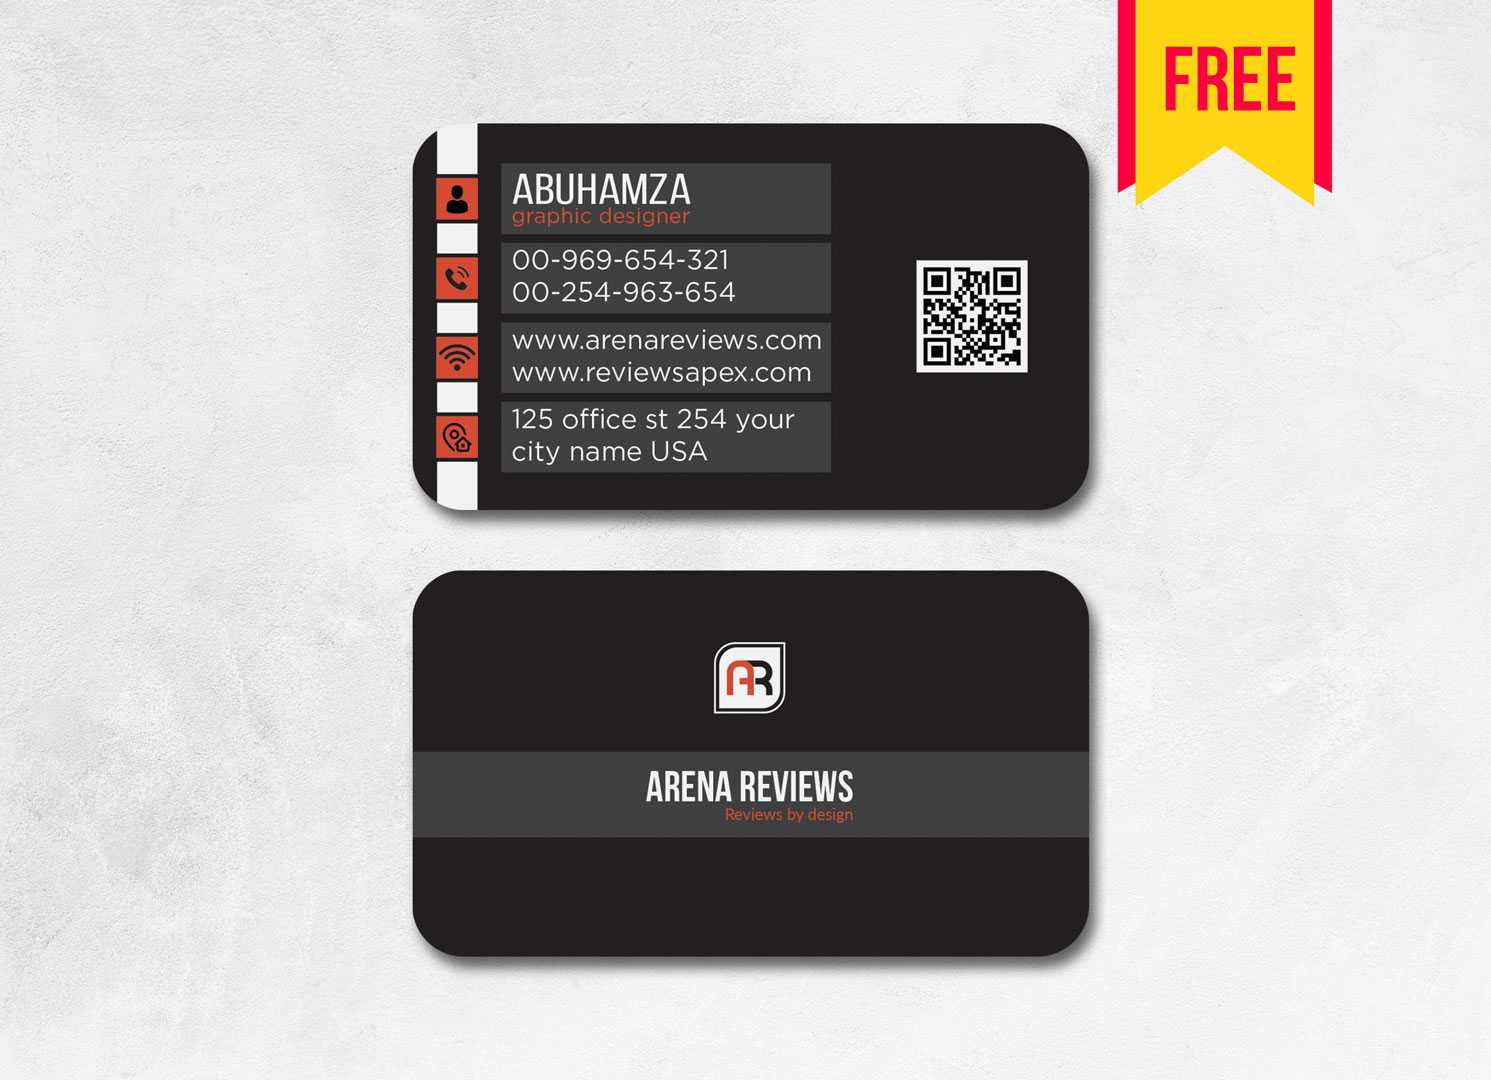 Dark Business Card Template Psd File | Free Download Within Photoshop Cs6 Business Card Template